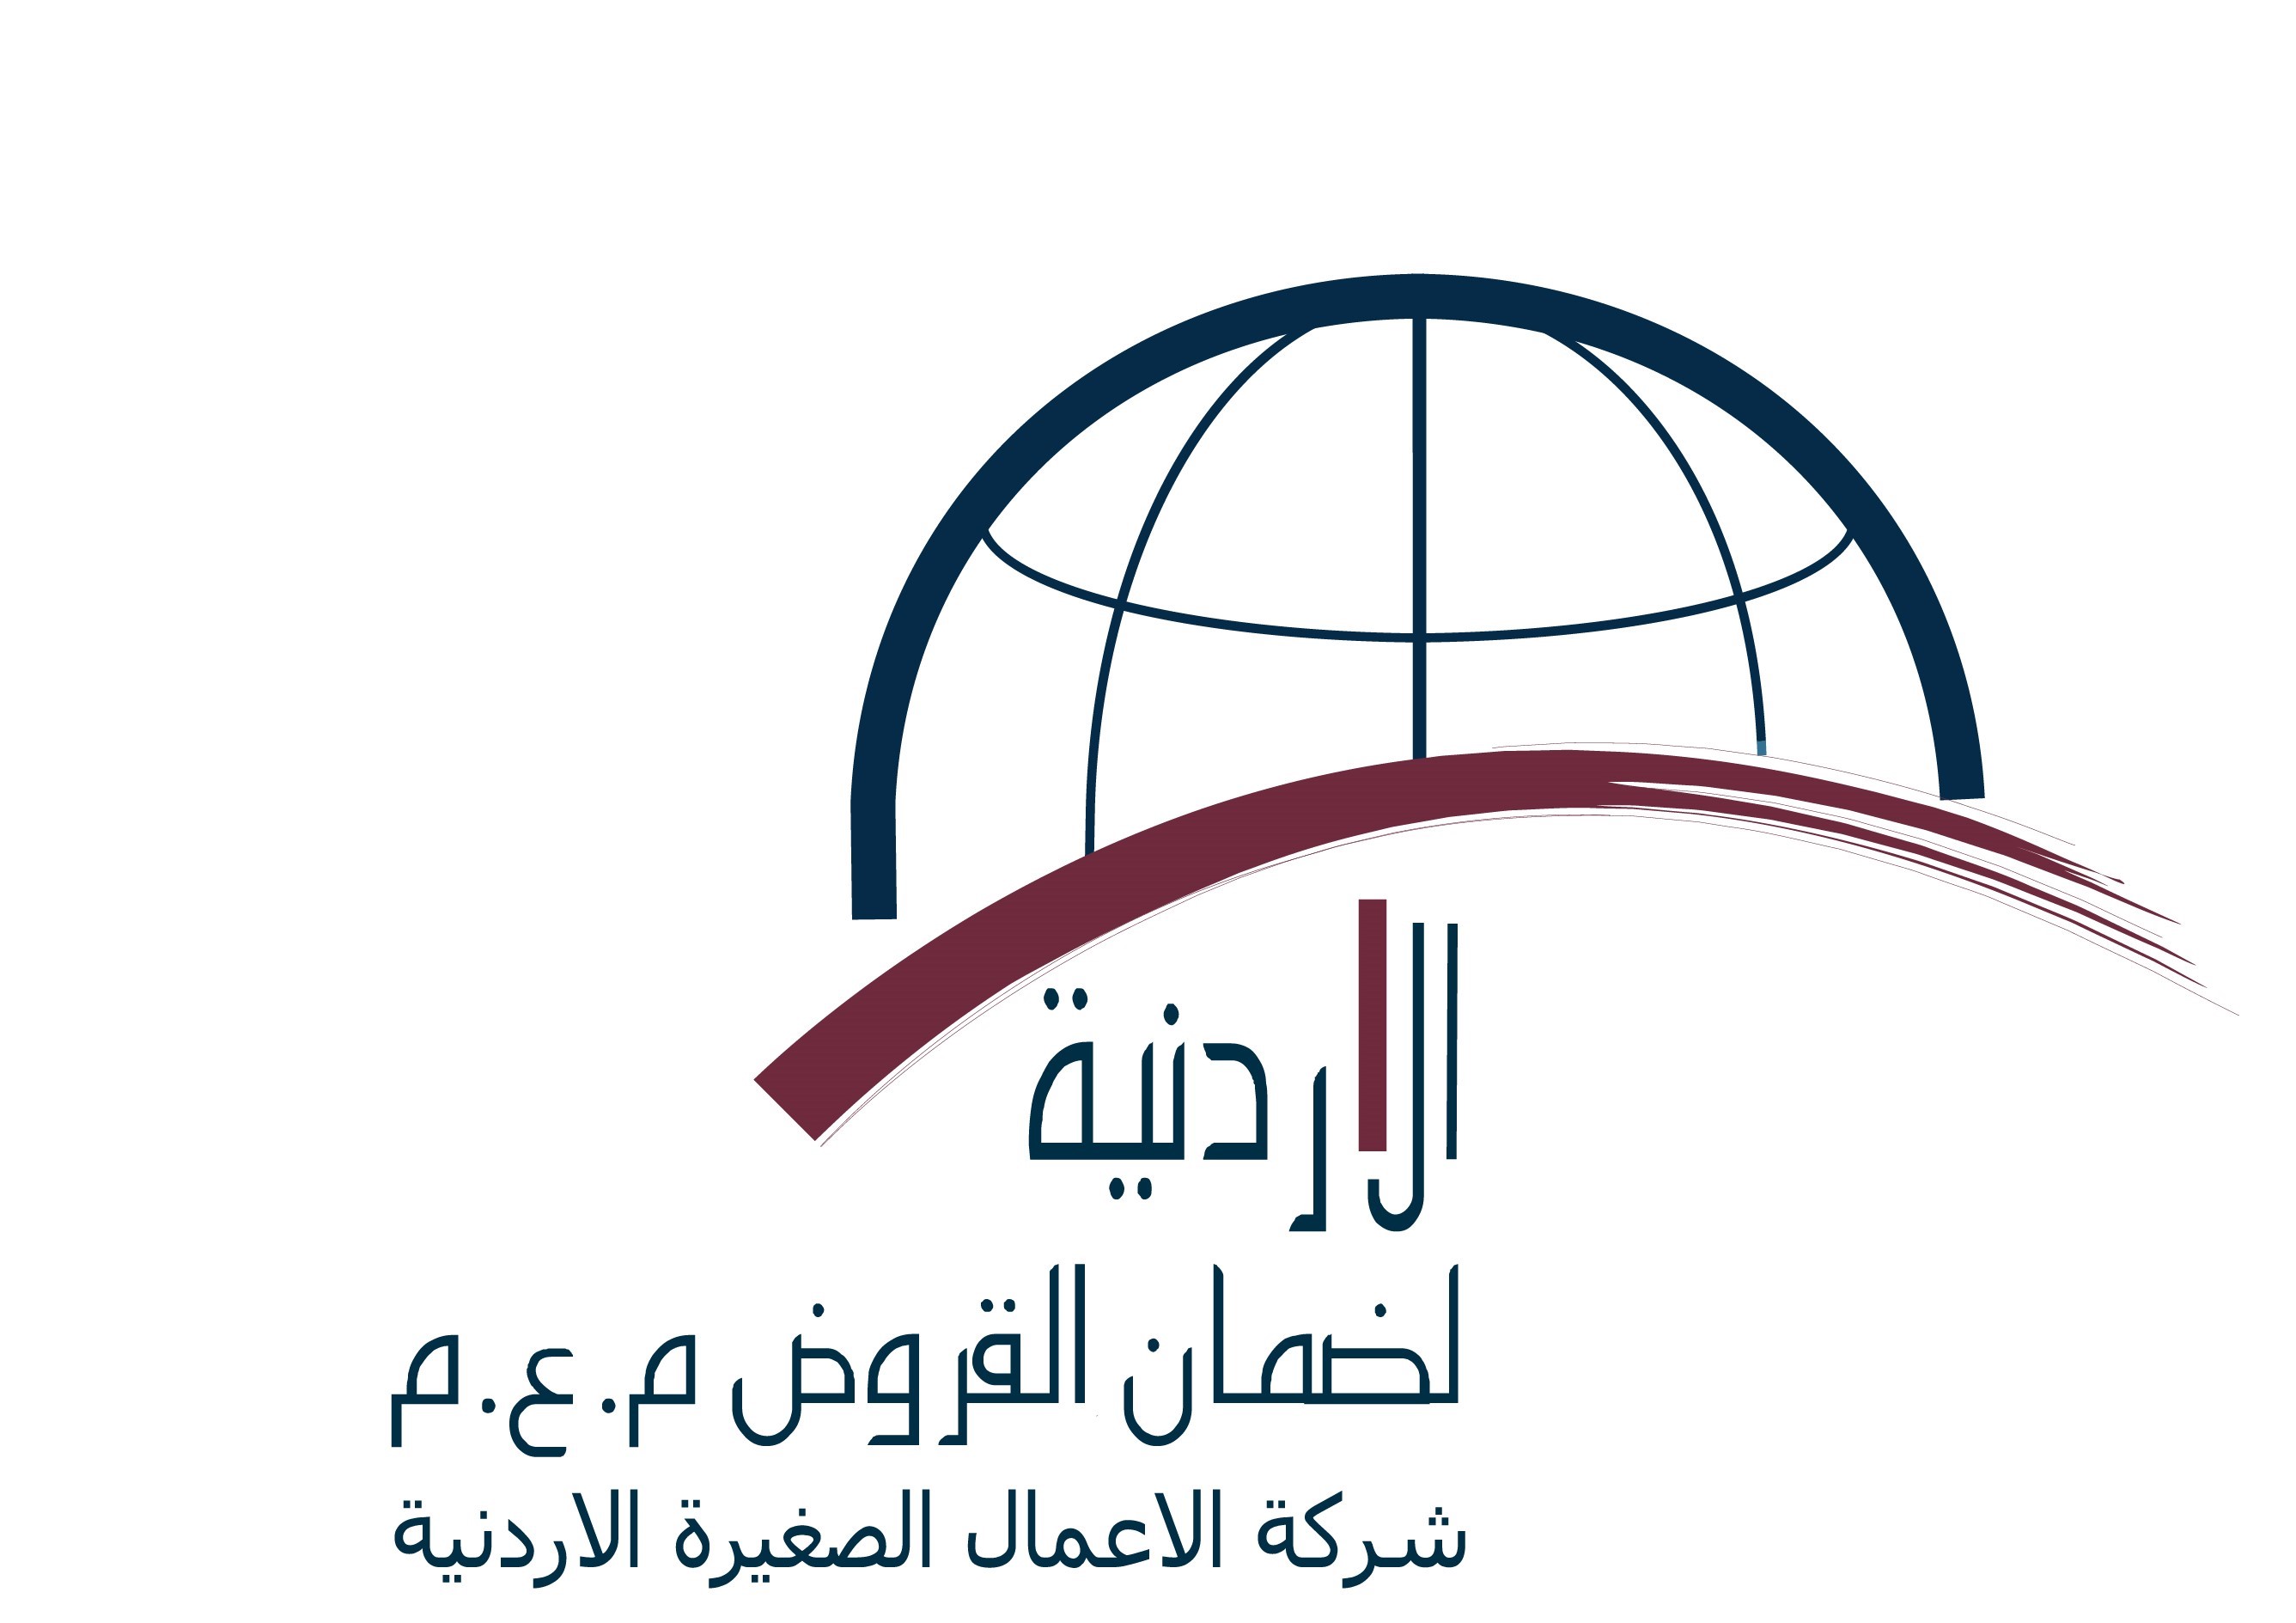 arabic-jlgc-logo-jpg-no-codes.jpg